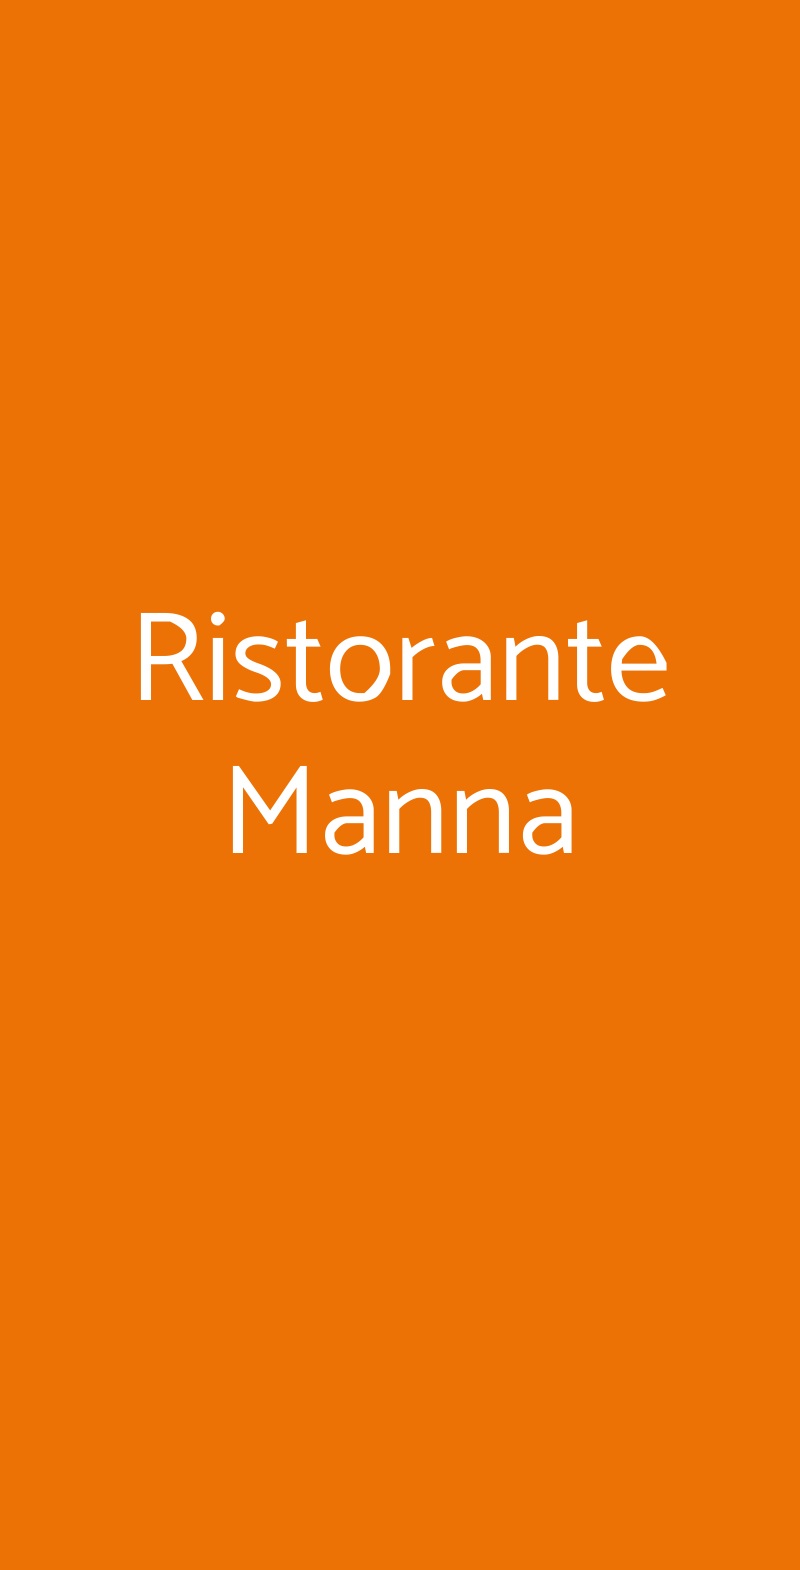 Ristorante Manna Milano menù 1 pagina